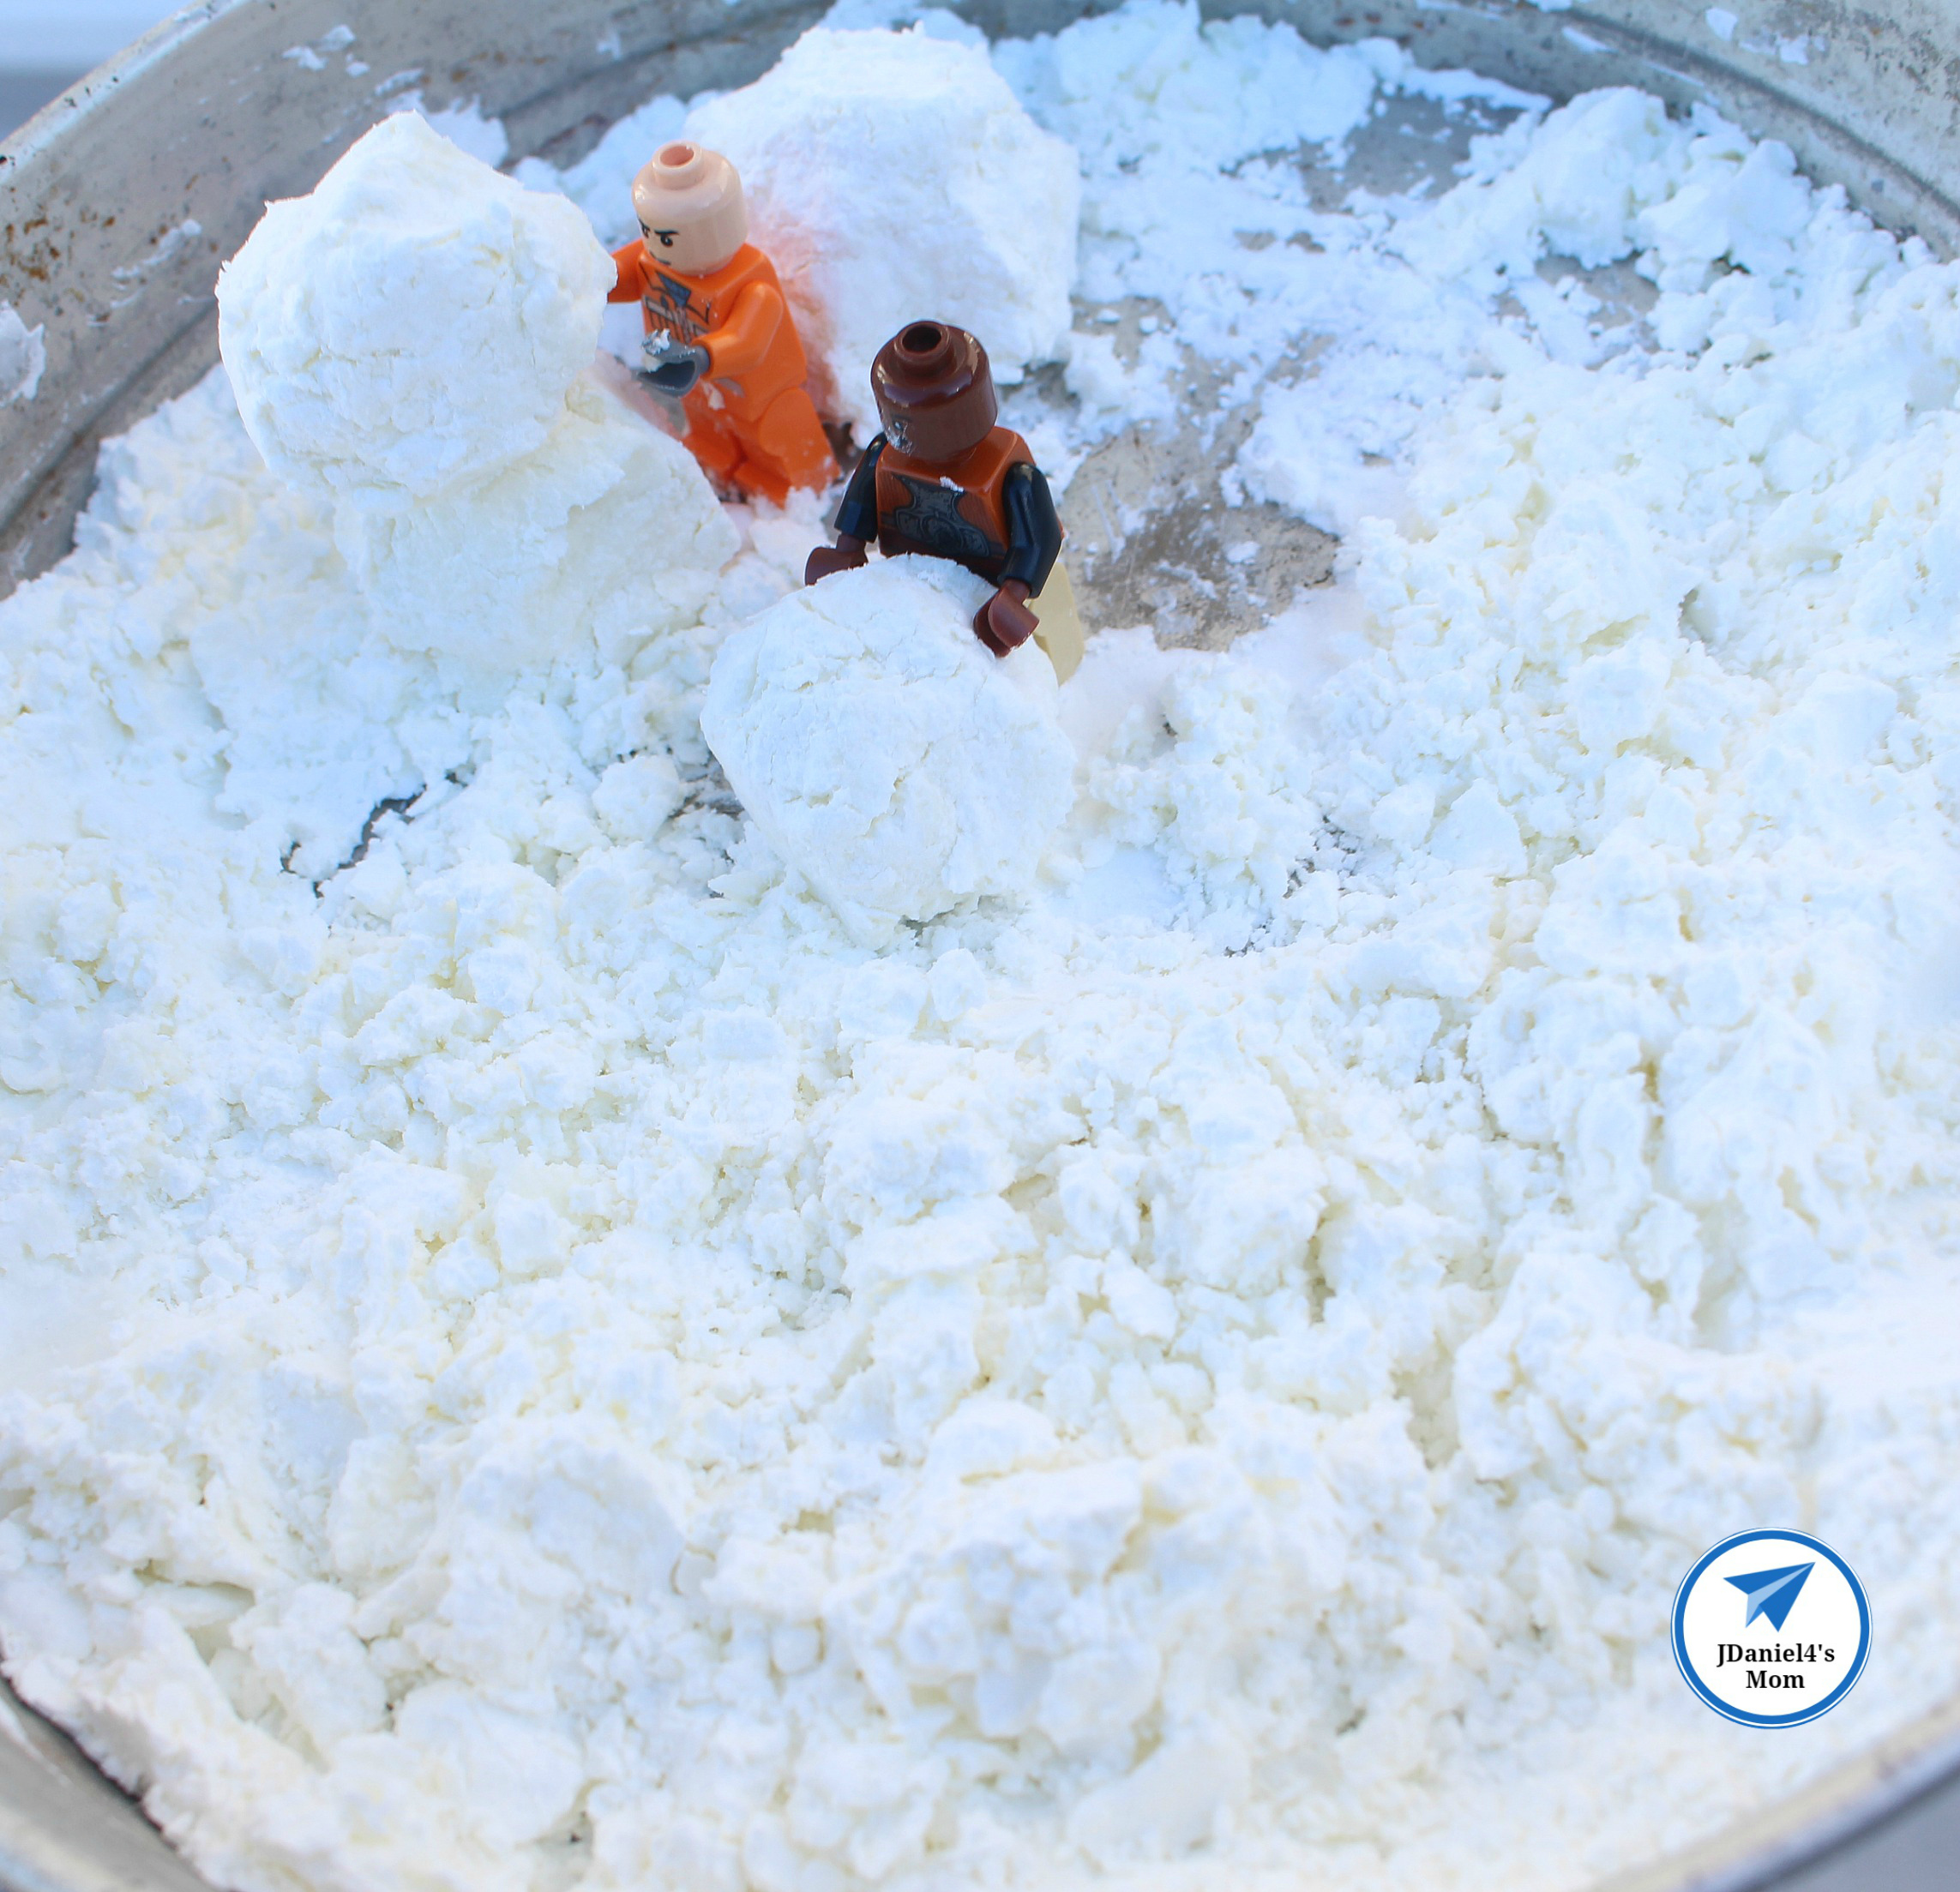 How to Make Fake Snow Recipes - Creating Snowballs 